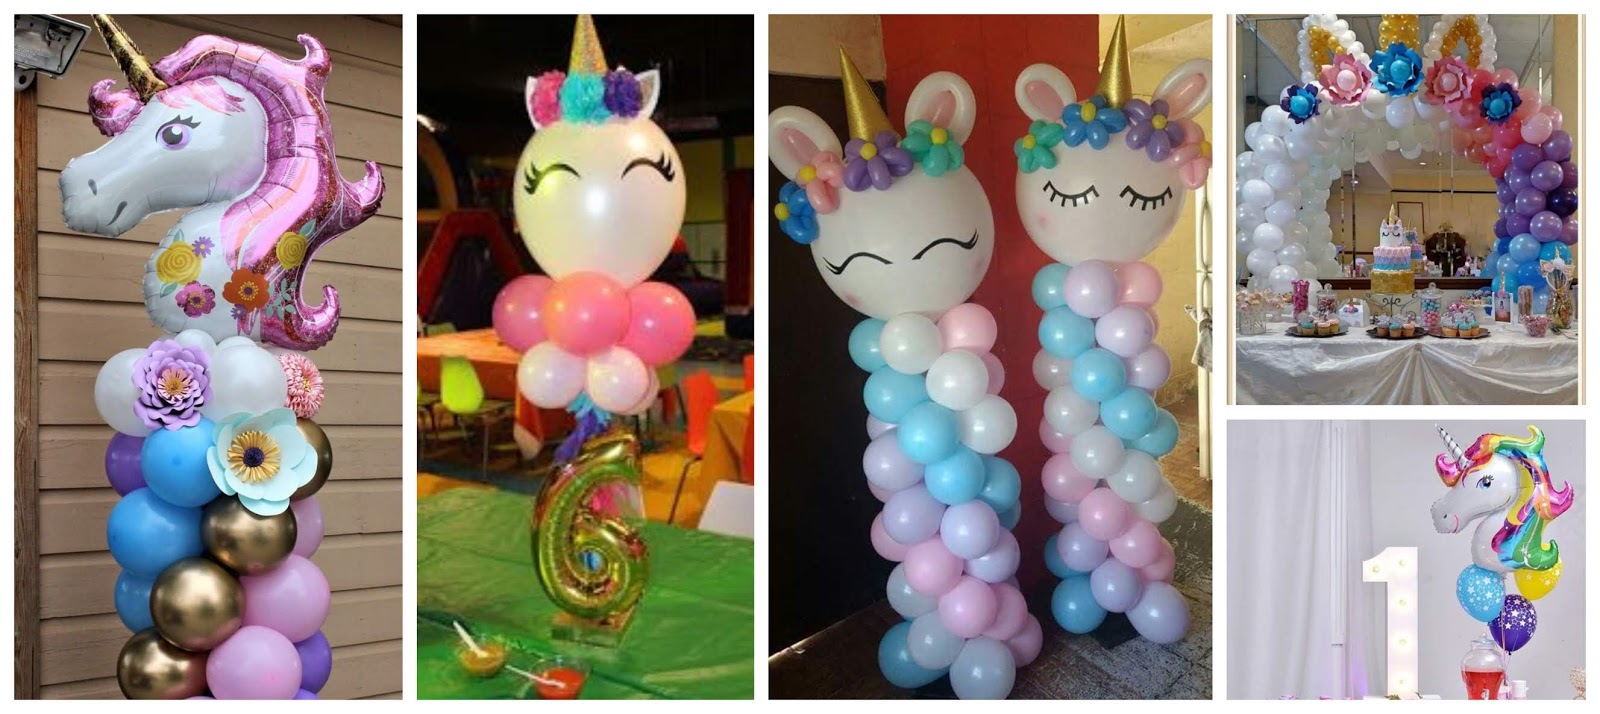 peine mecánico religión 14 Ideas para decorar con globos una fiesta de unicornios ~ Solountip.com